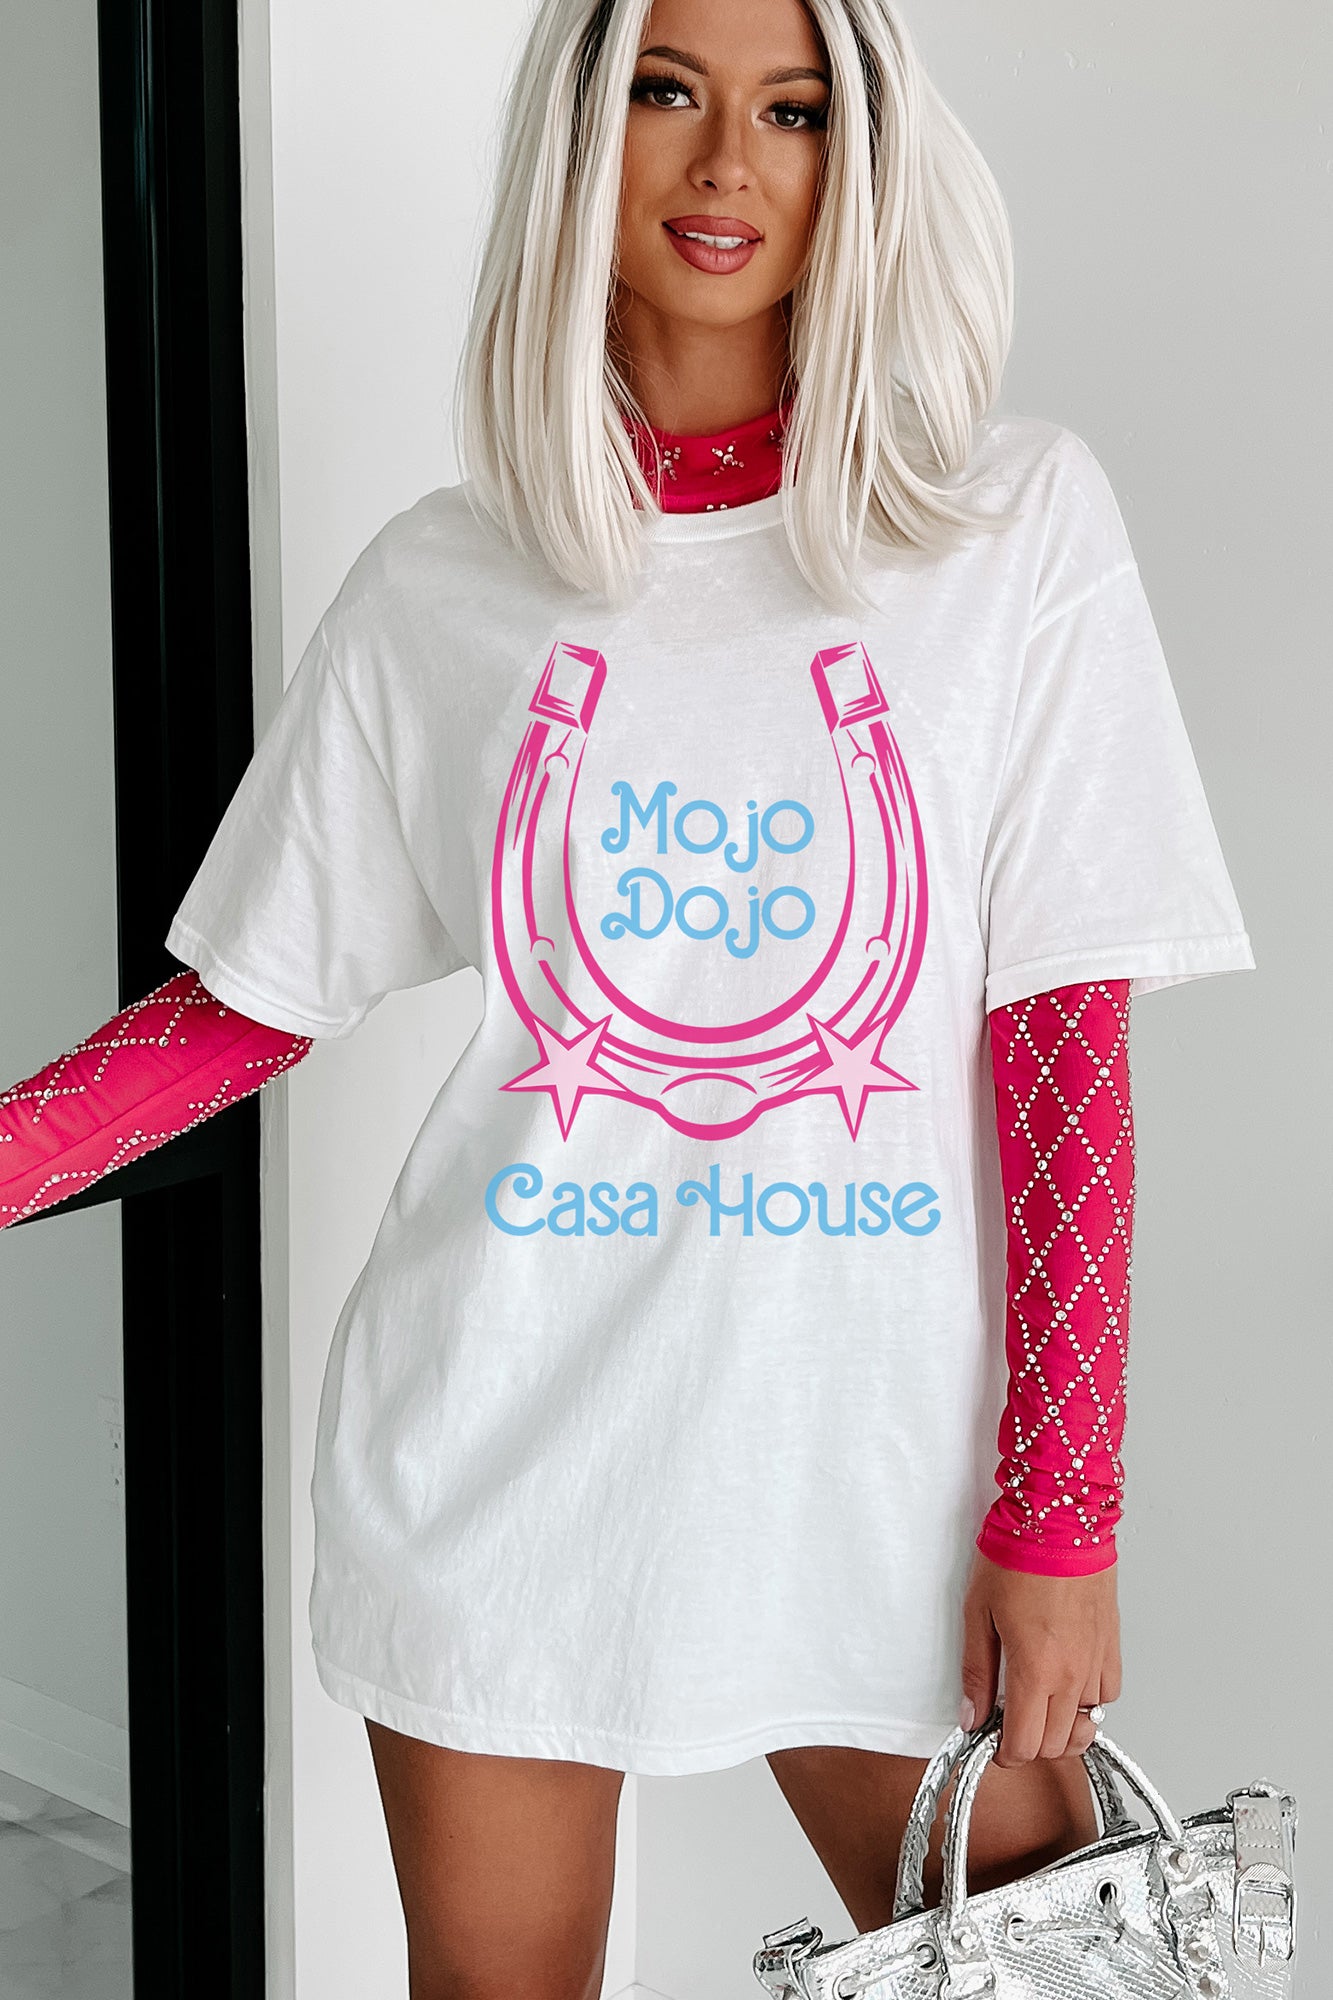 "Mojo Dojo Casa House" Graphic - Multiple Shirt Options (White) - Print On Demand - NanaMacs